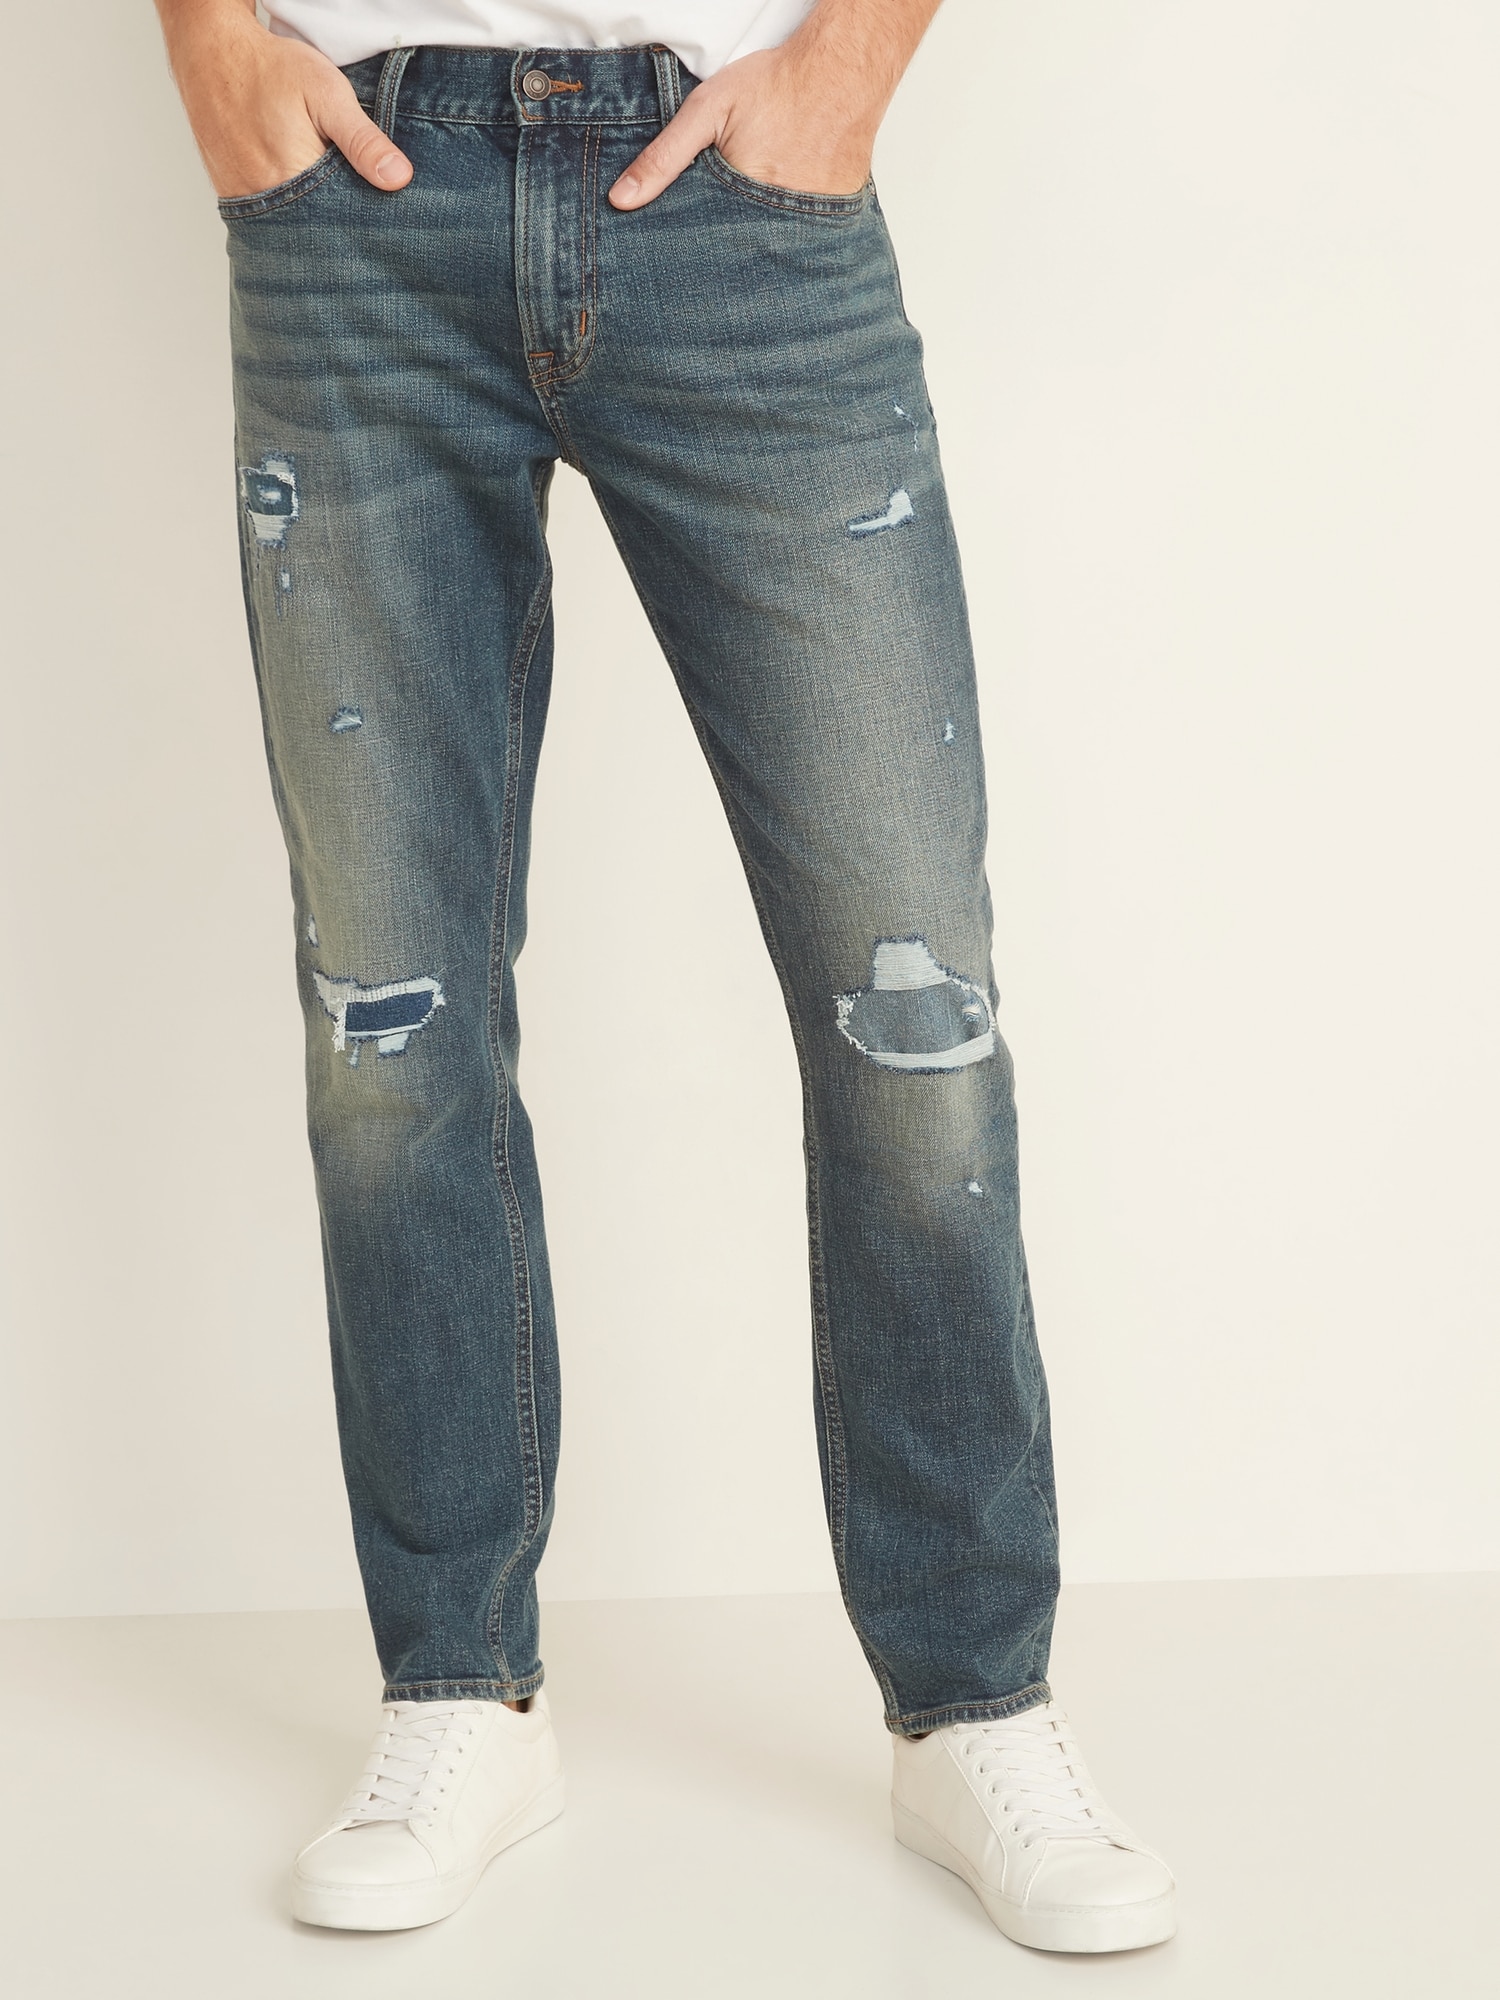 Slim Built-In Flex Distressed Jeans